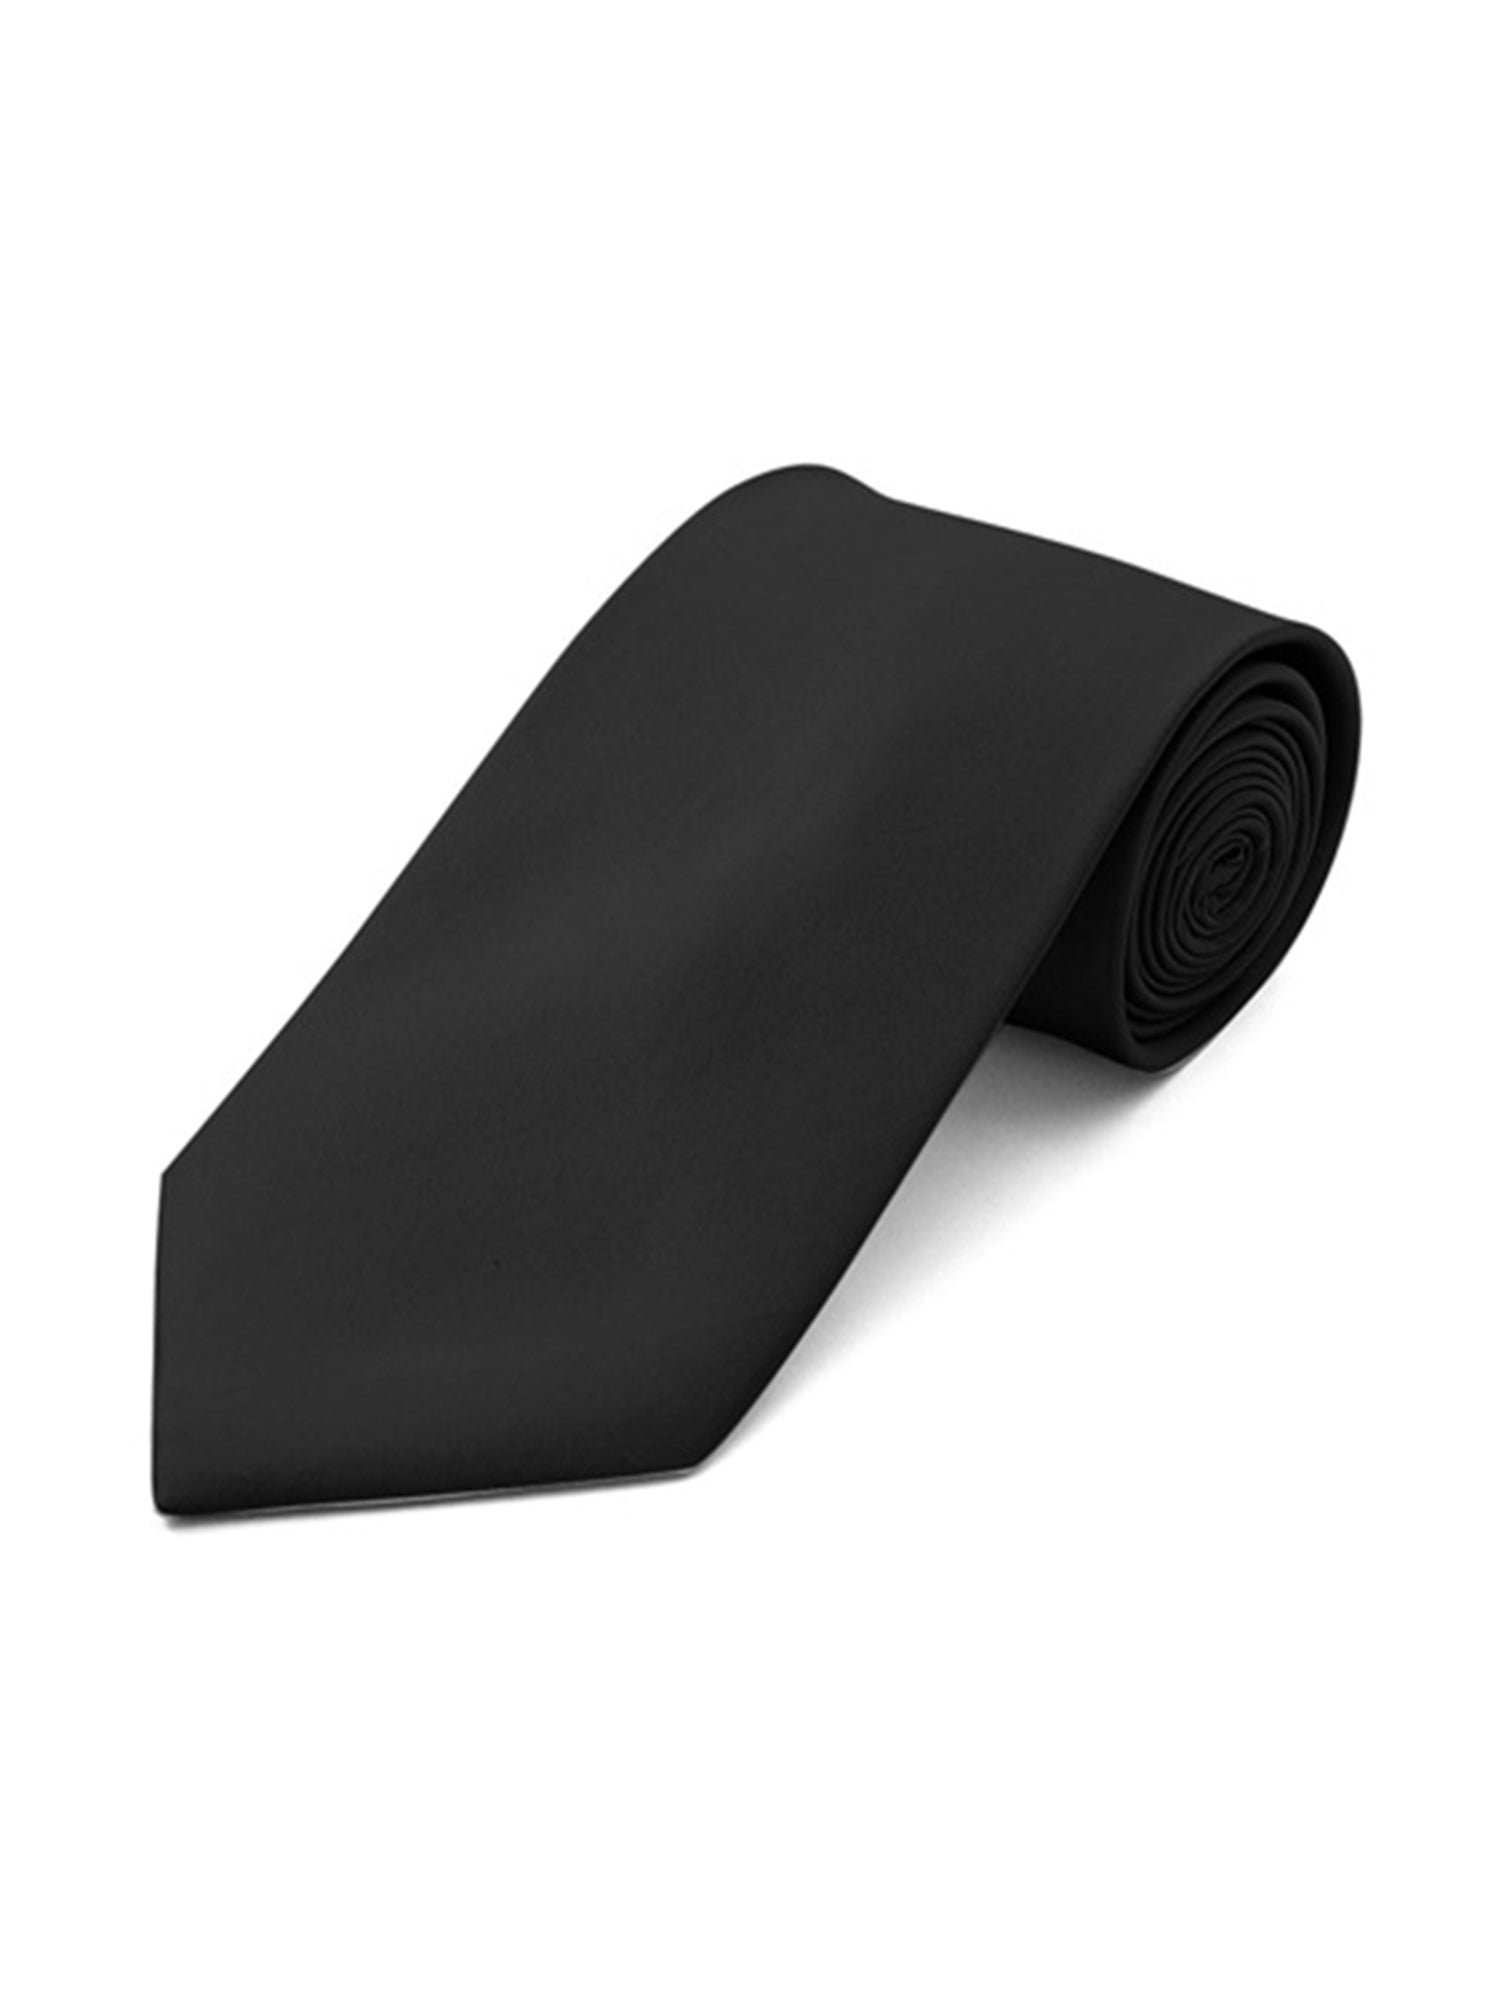 Men's Solid Color 2.75 Inch Wide And 57 Inch Long Slim Neckties Neck Tie TheDapperTie Black  